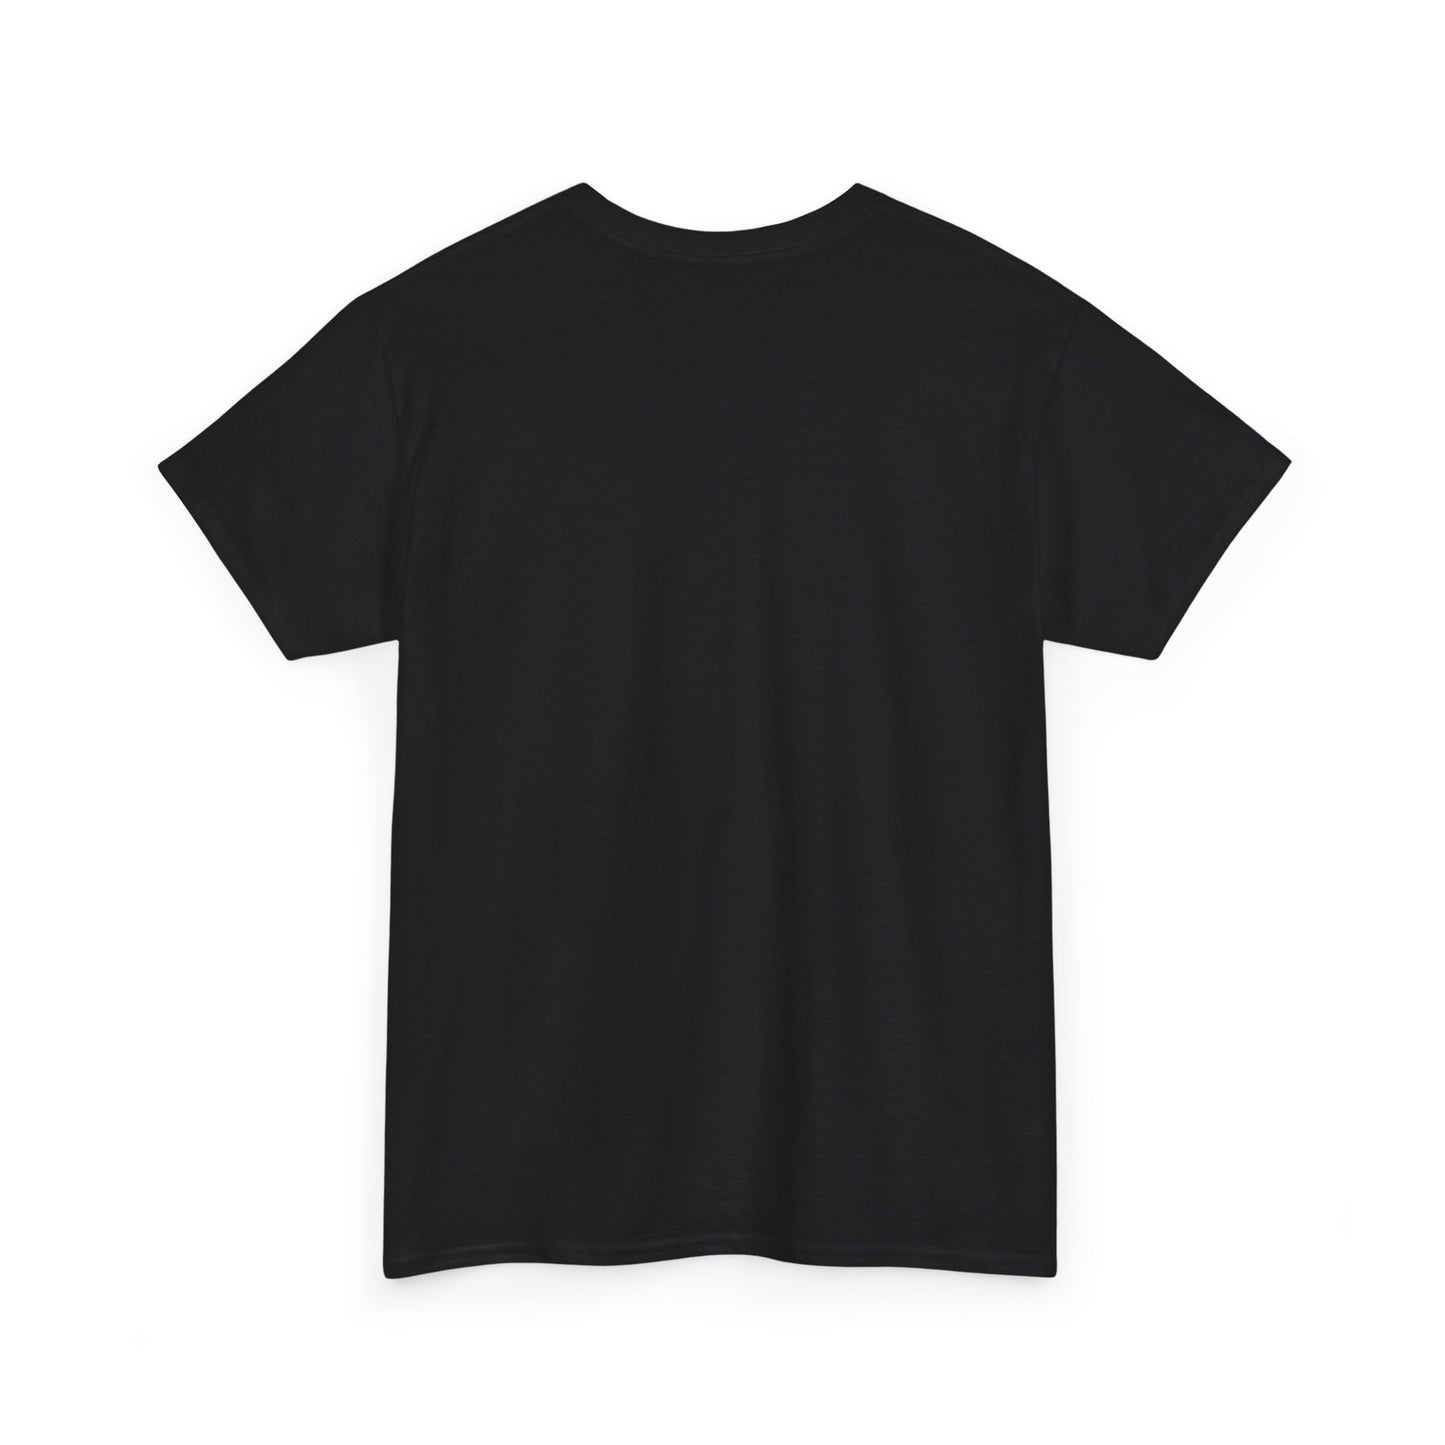 $5 Bling Boss T-shirt - Regular